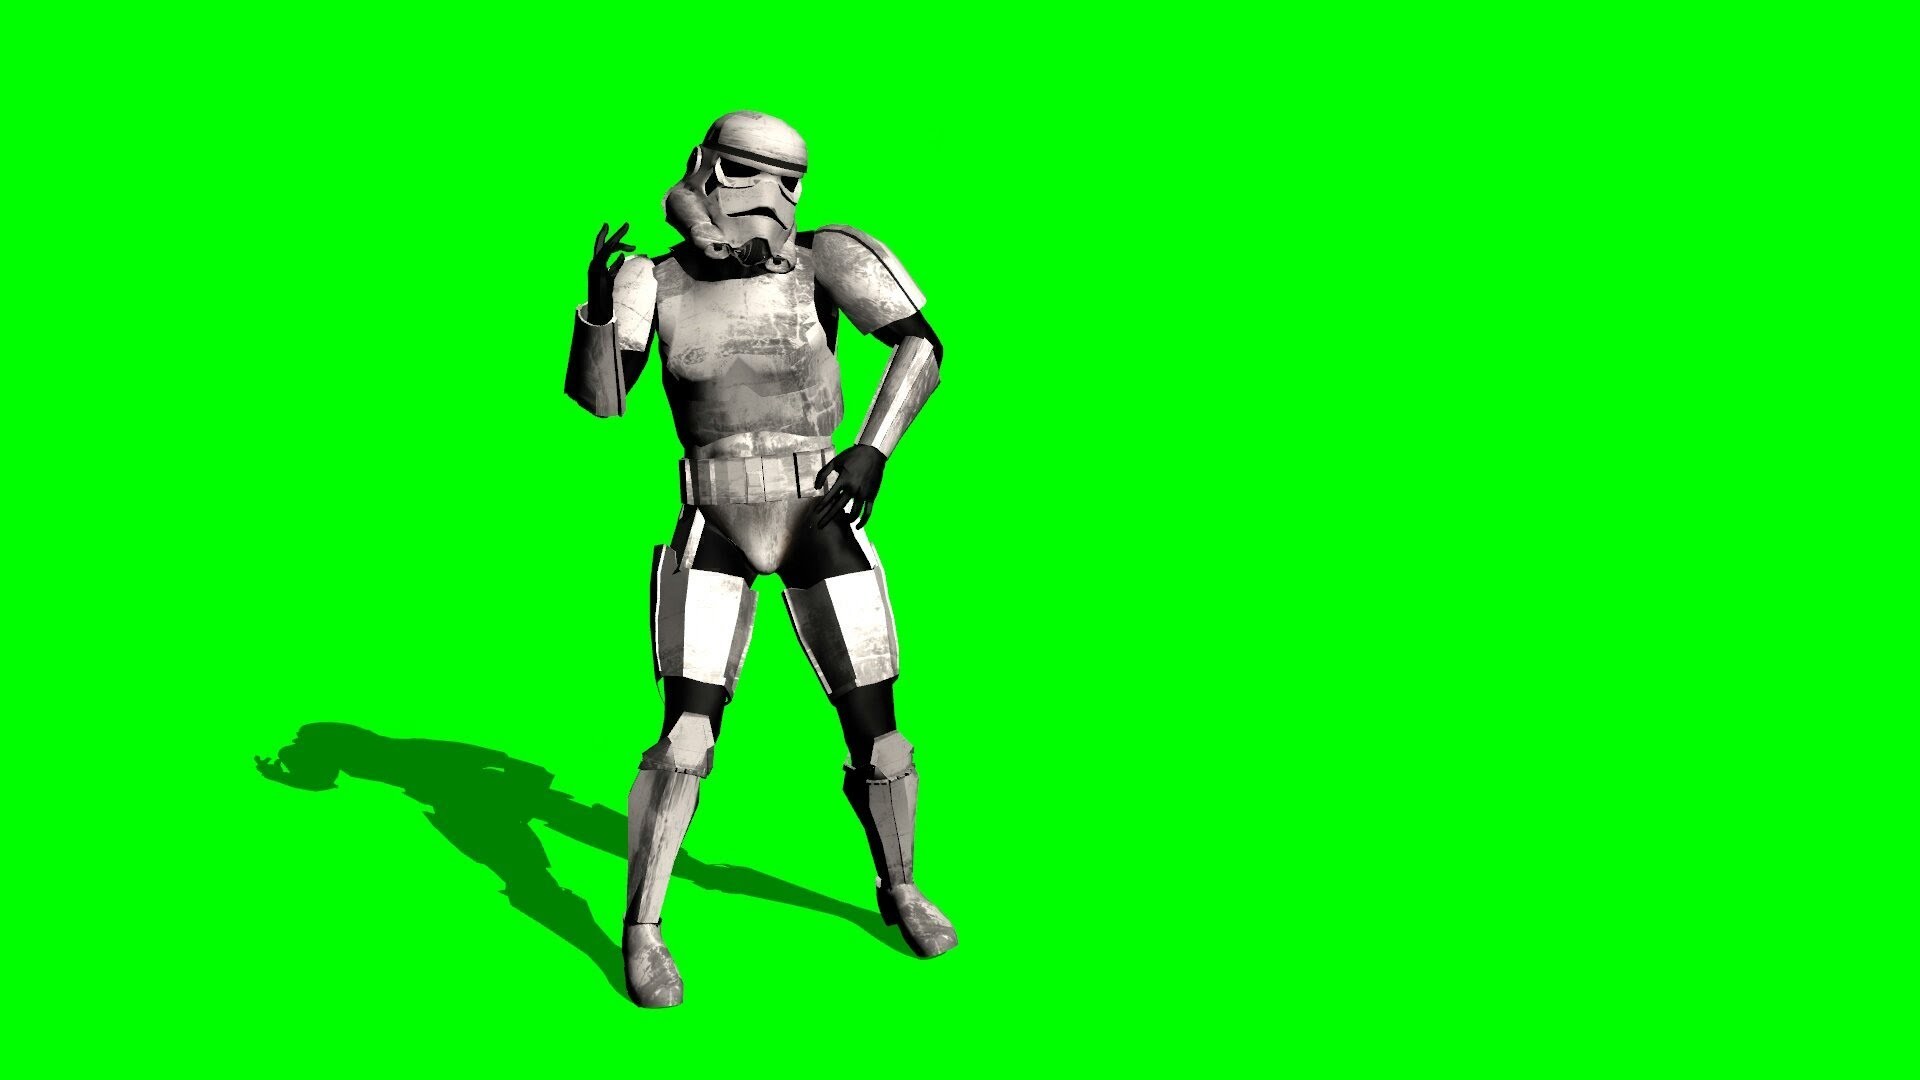 1920x1080 Star Wars dancing Storm Trooper on green screen - free green screen -  YouTube